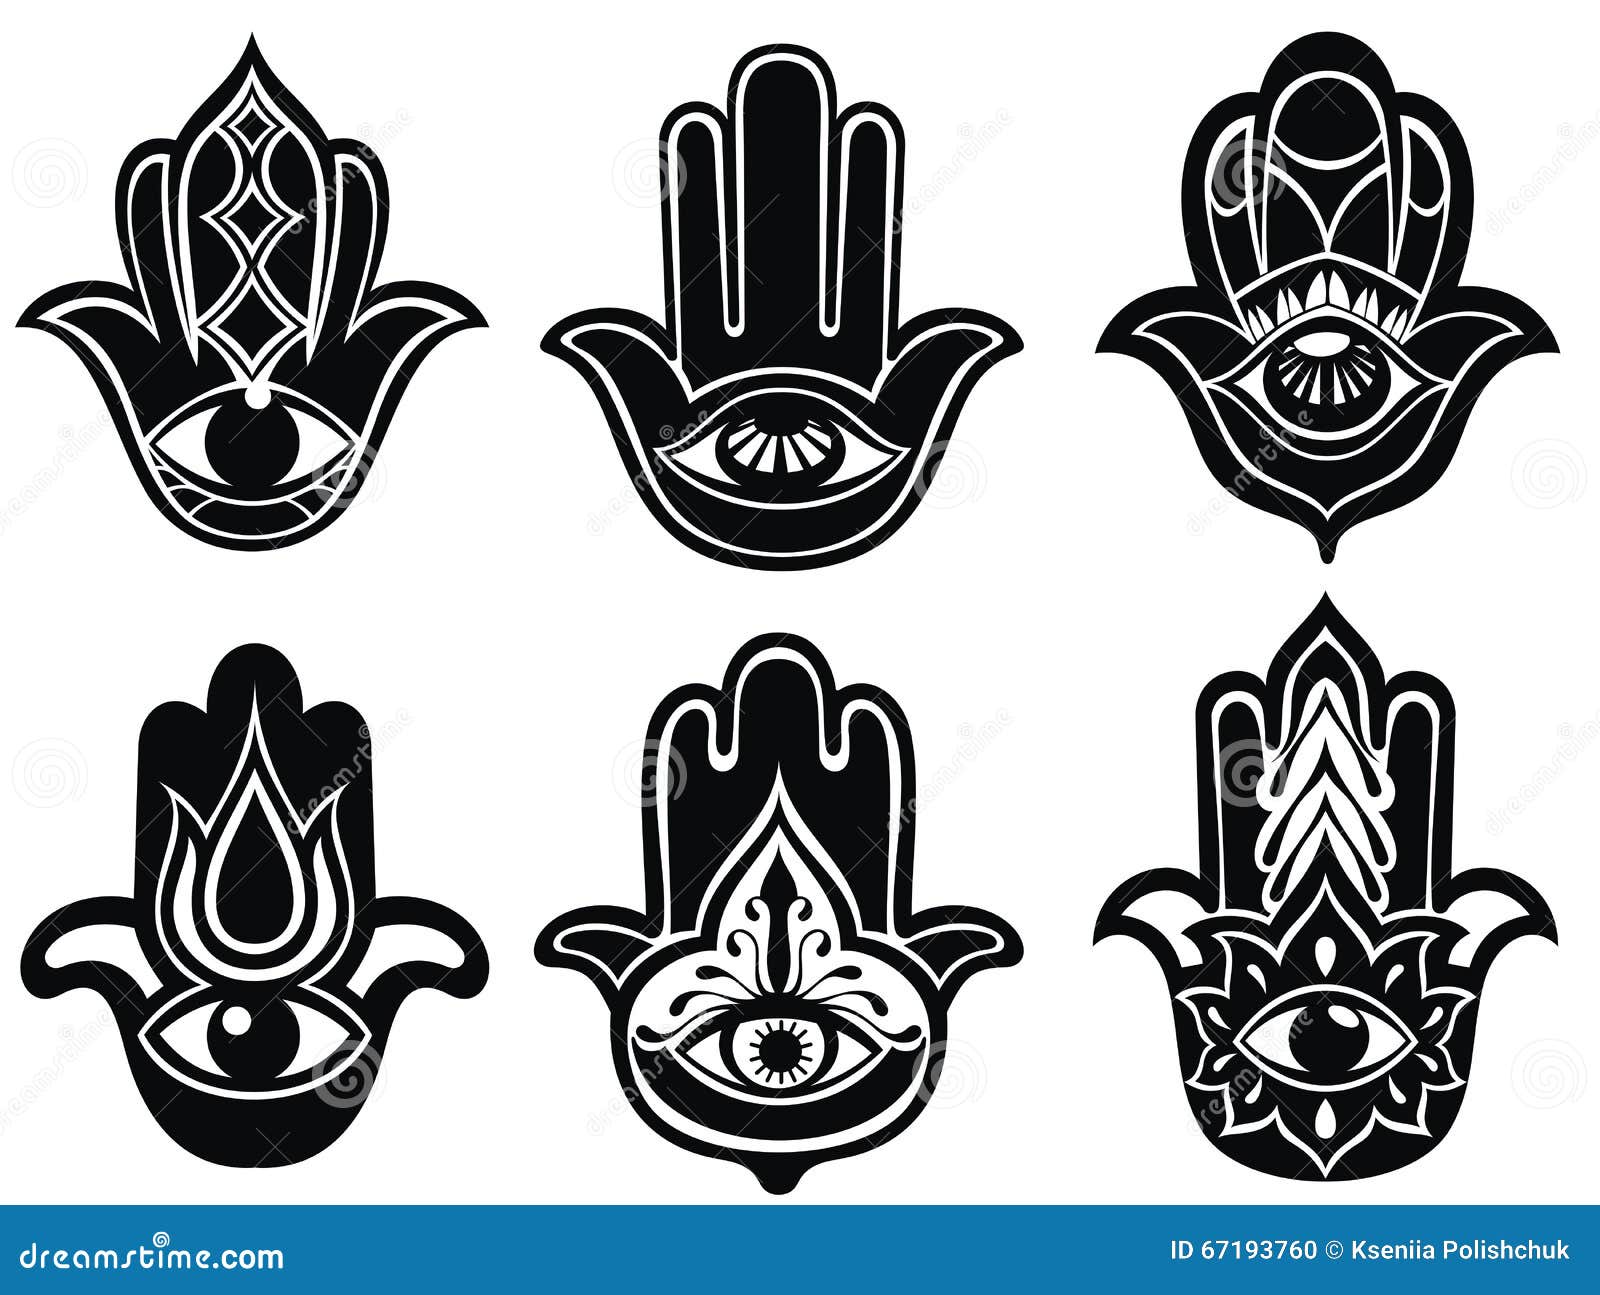 Set Of Hands Of Fatima - Amulet Vector Illustration | CartoonDealer.com ...